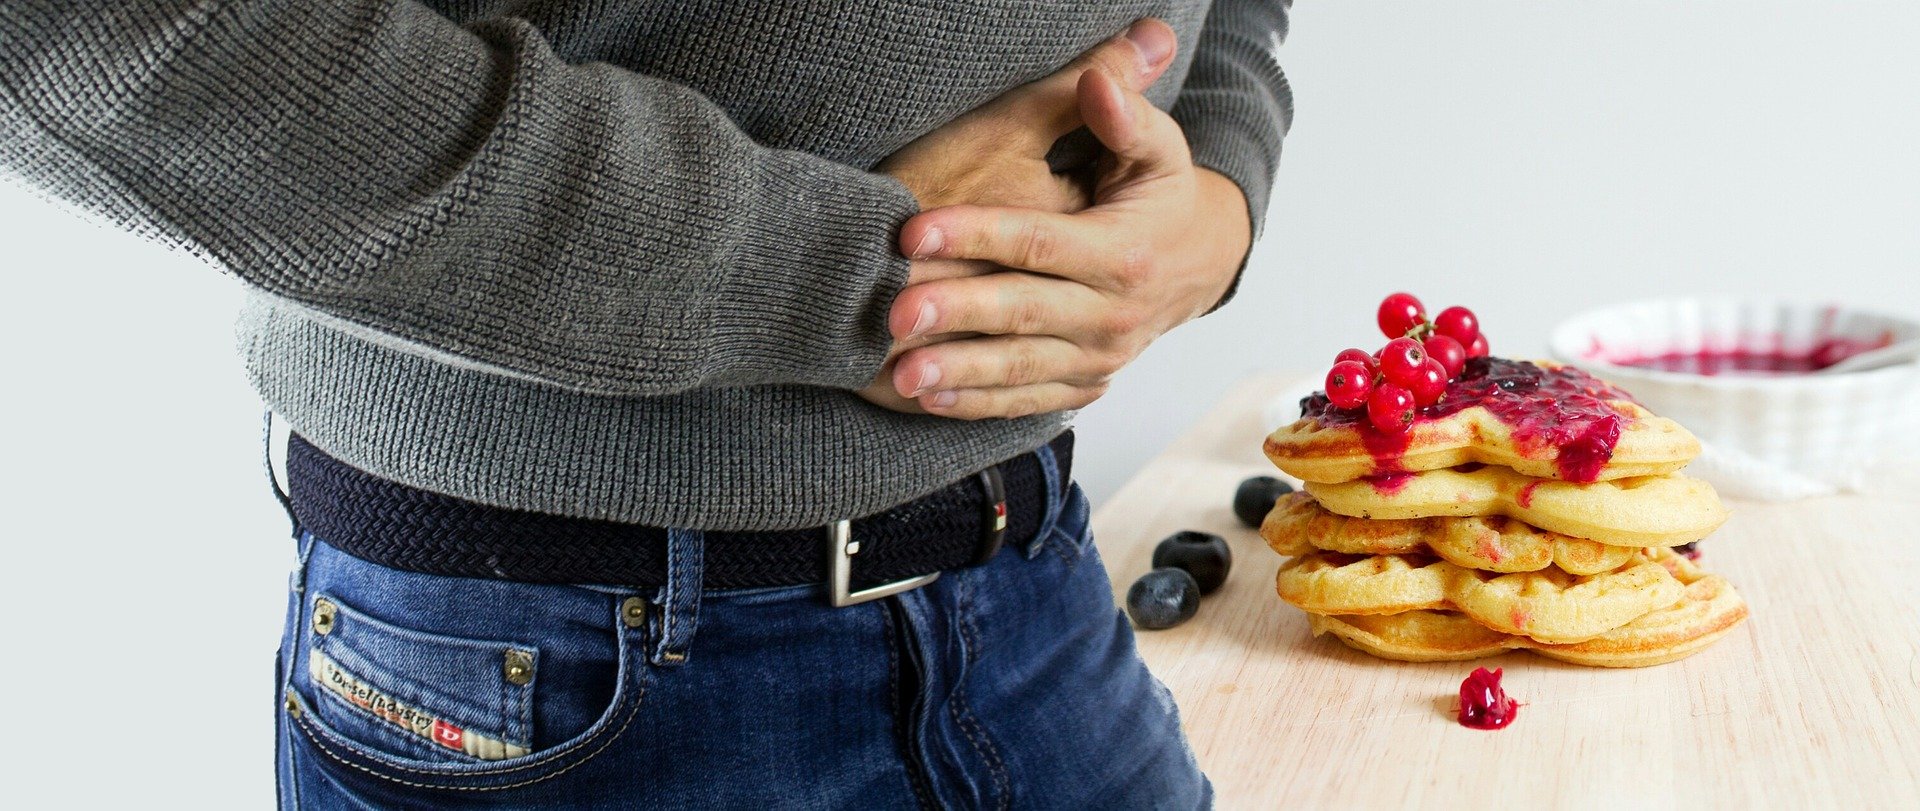 Jedzenie kompulsywne (eating disorder)